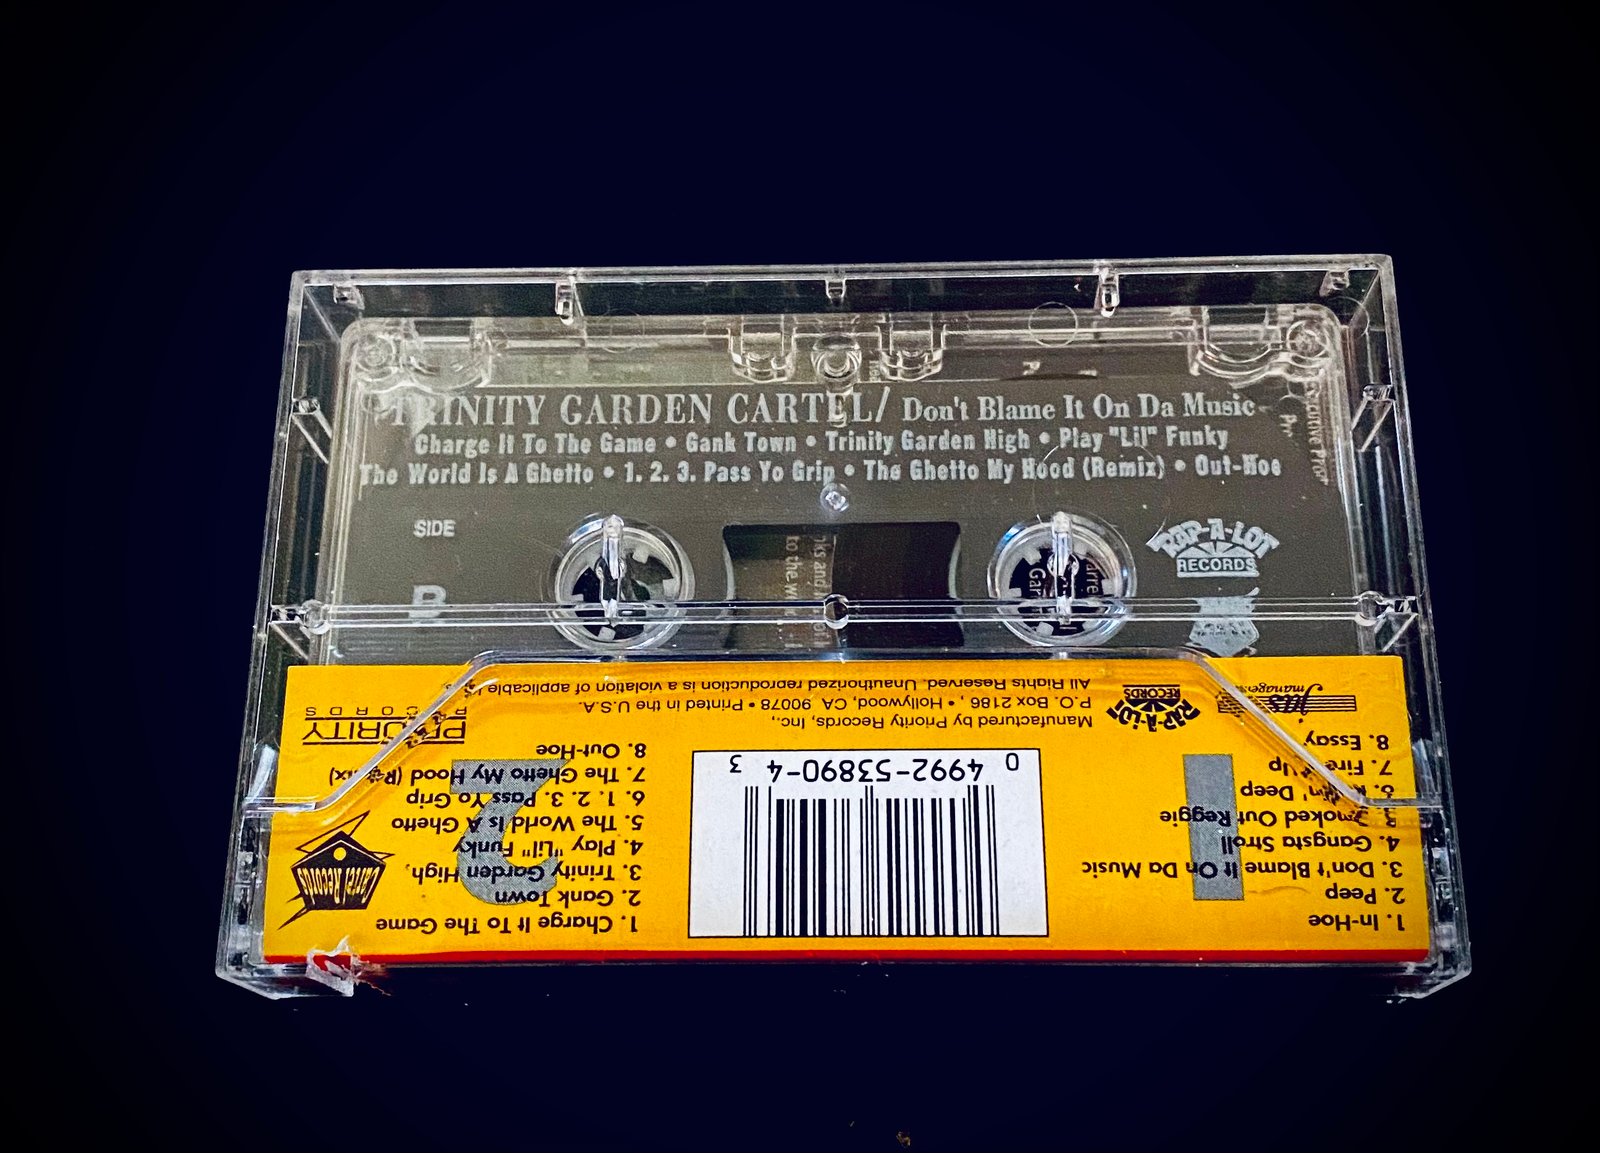 Trinity Garden Cartel “Don't Blame It On Da Music” | Throwdown Records